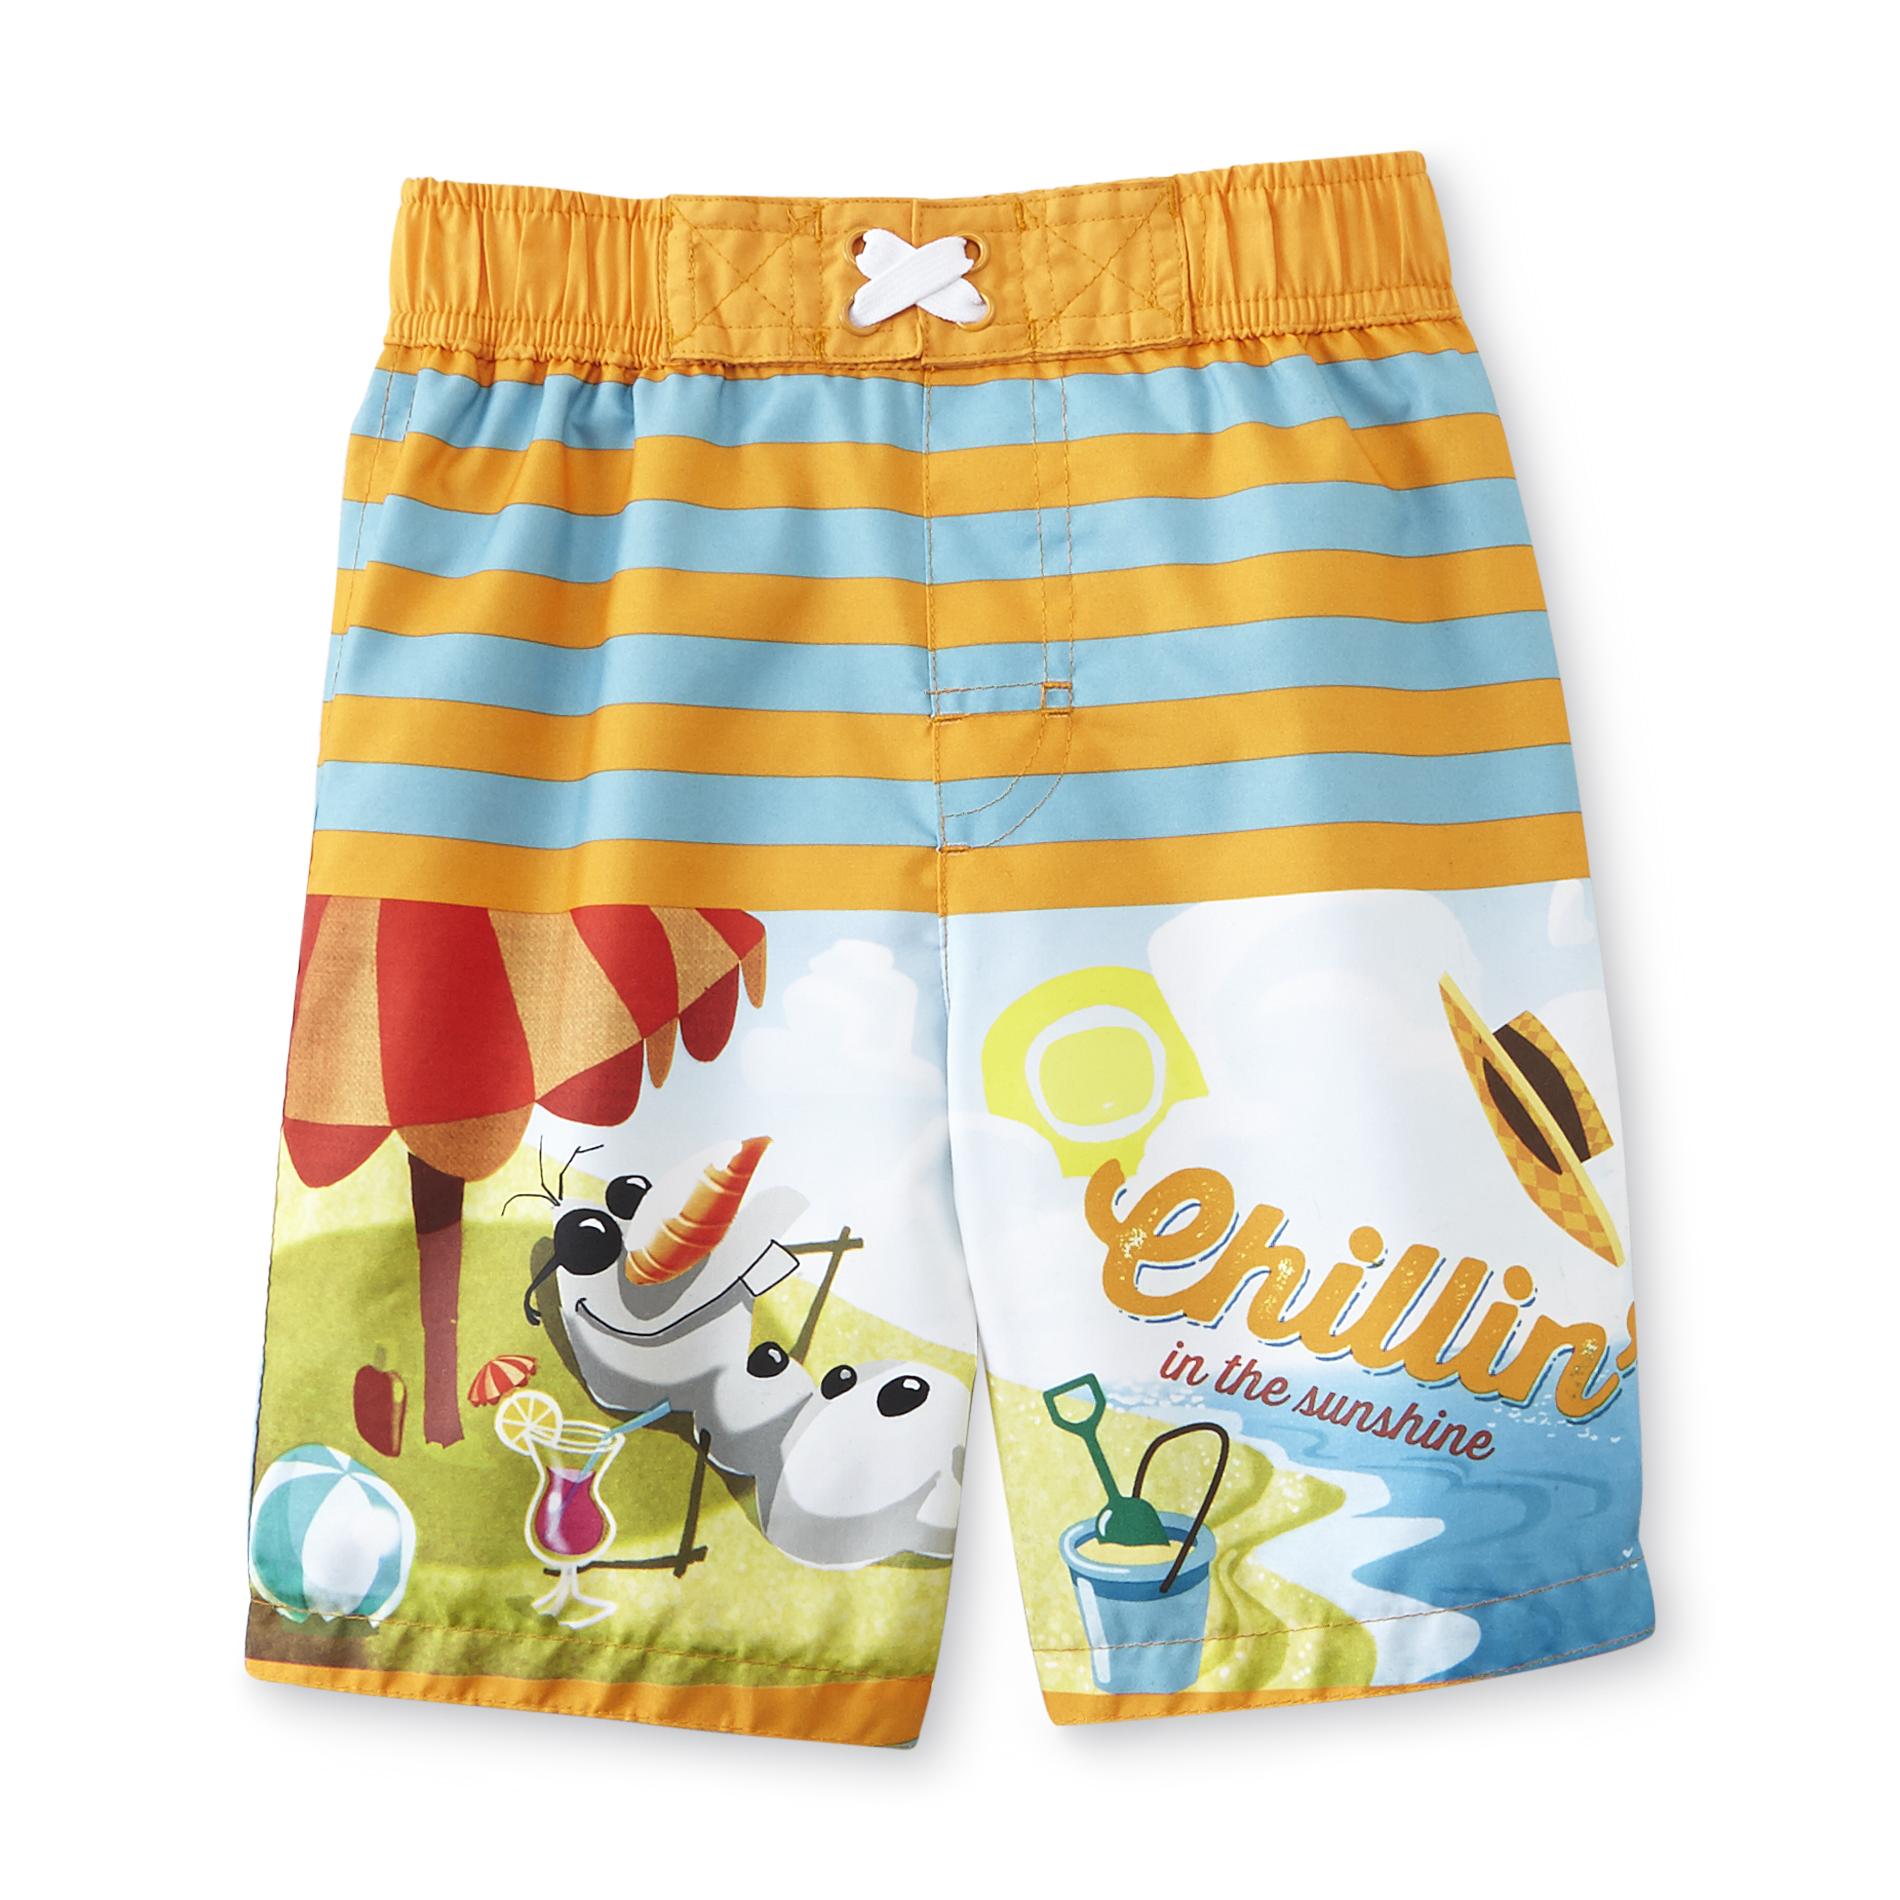 Disney Frozen Toddler Boy's Swim Trunks - Olaf